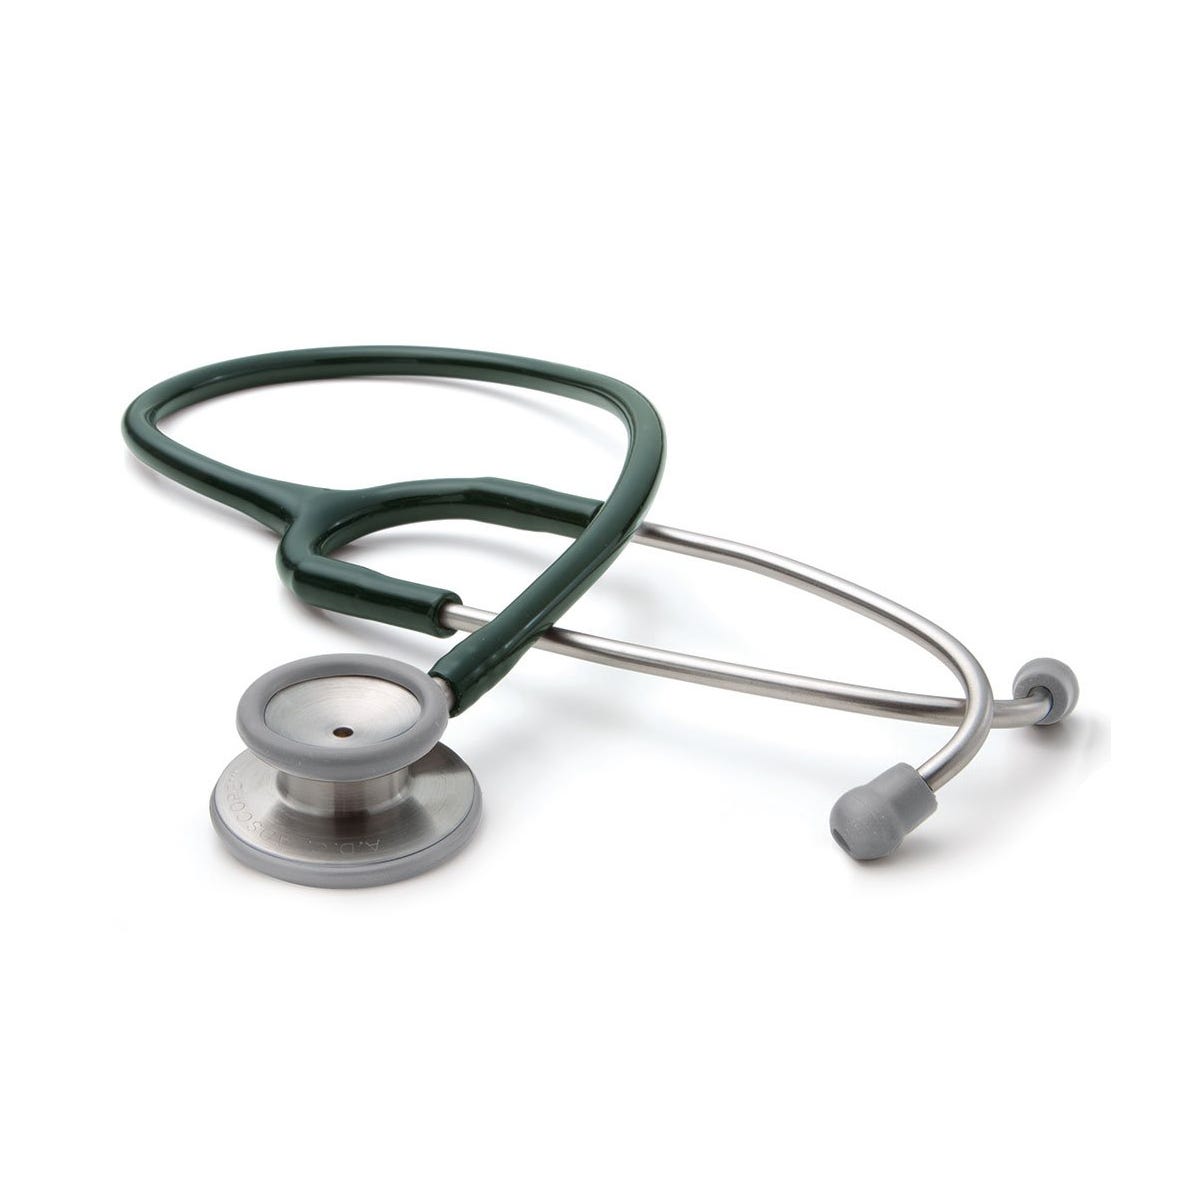 Adscope® Clinician Stethoscope Overall Length 30" Dark Green